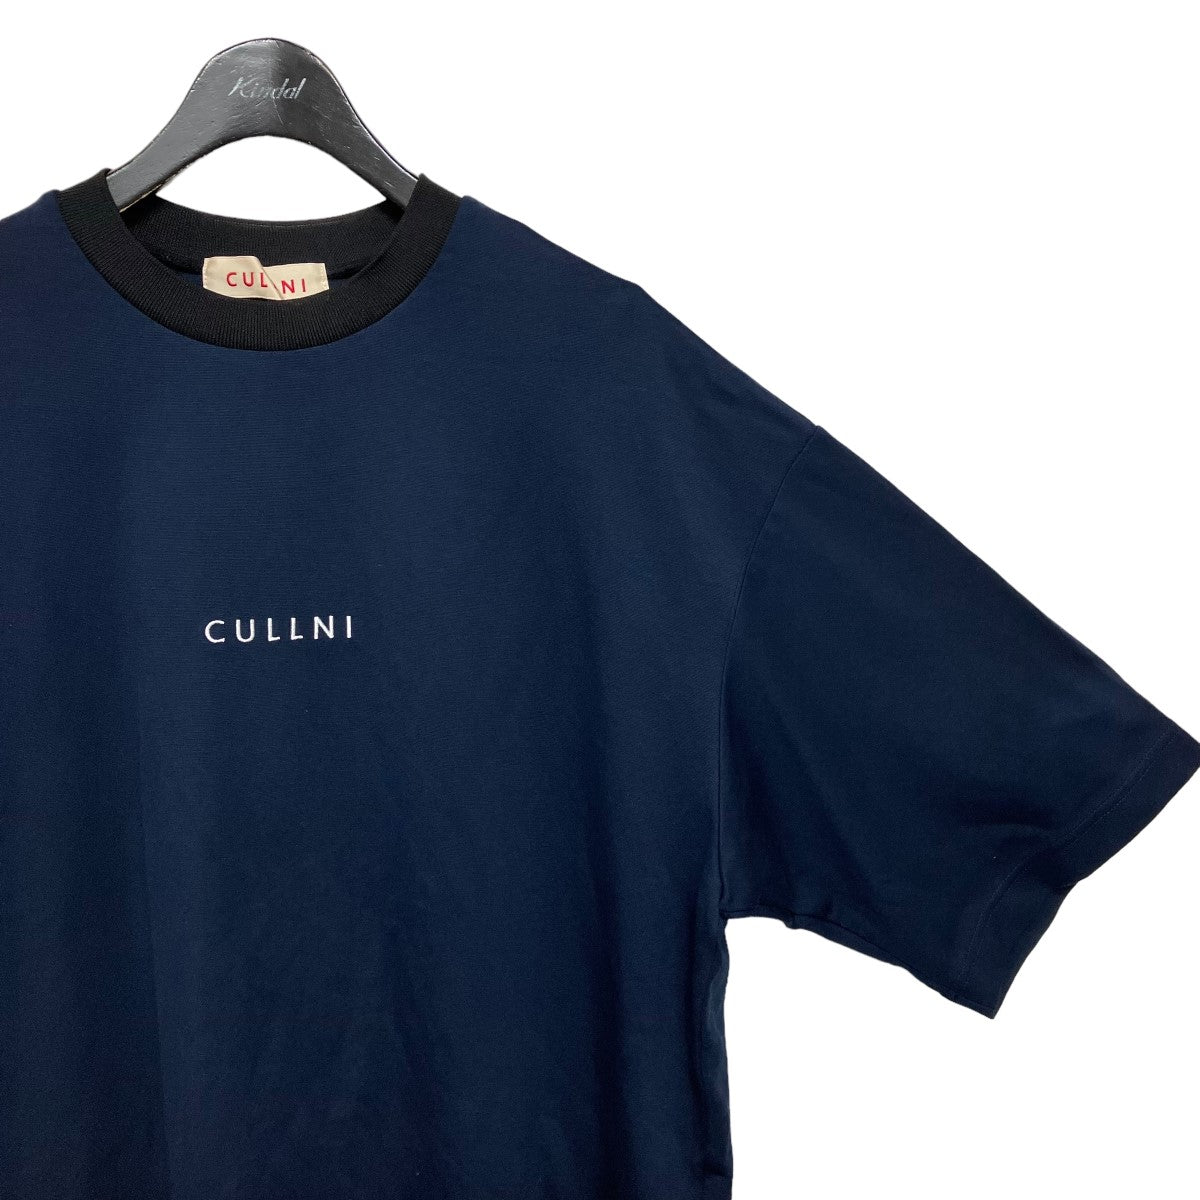 CULLNI(クルニ) STUDIOS別注ロゴ刺繍Tシャツ 21-SS-065